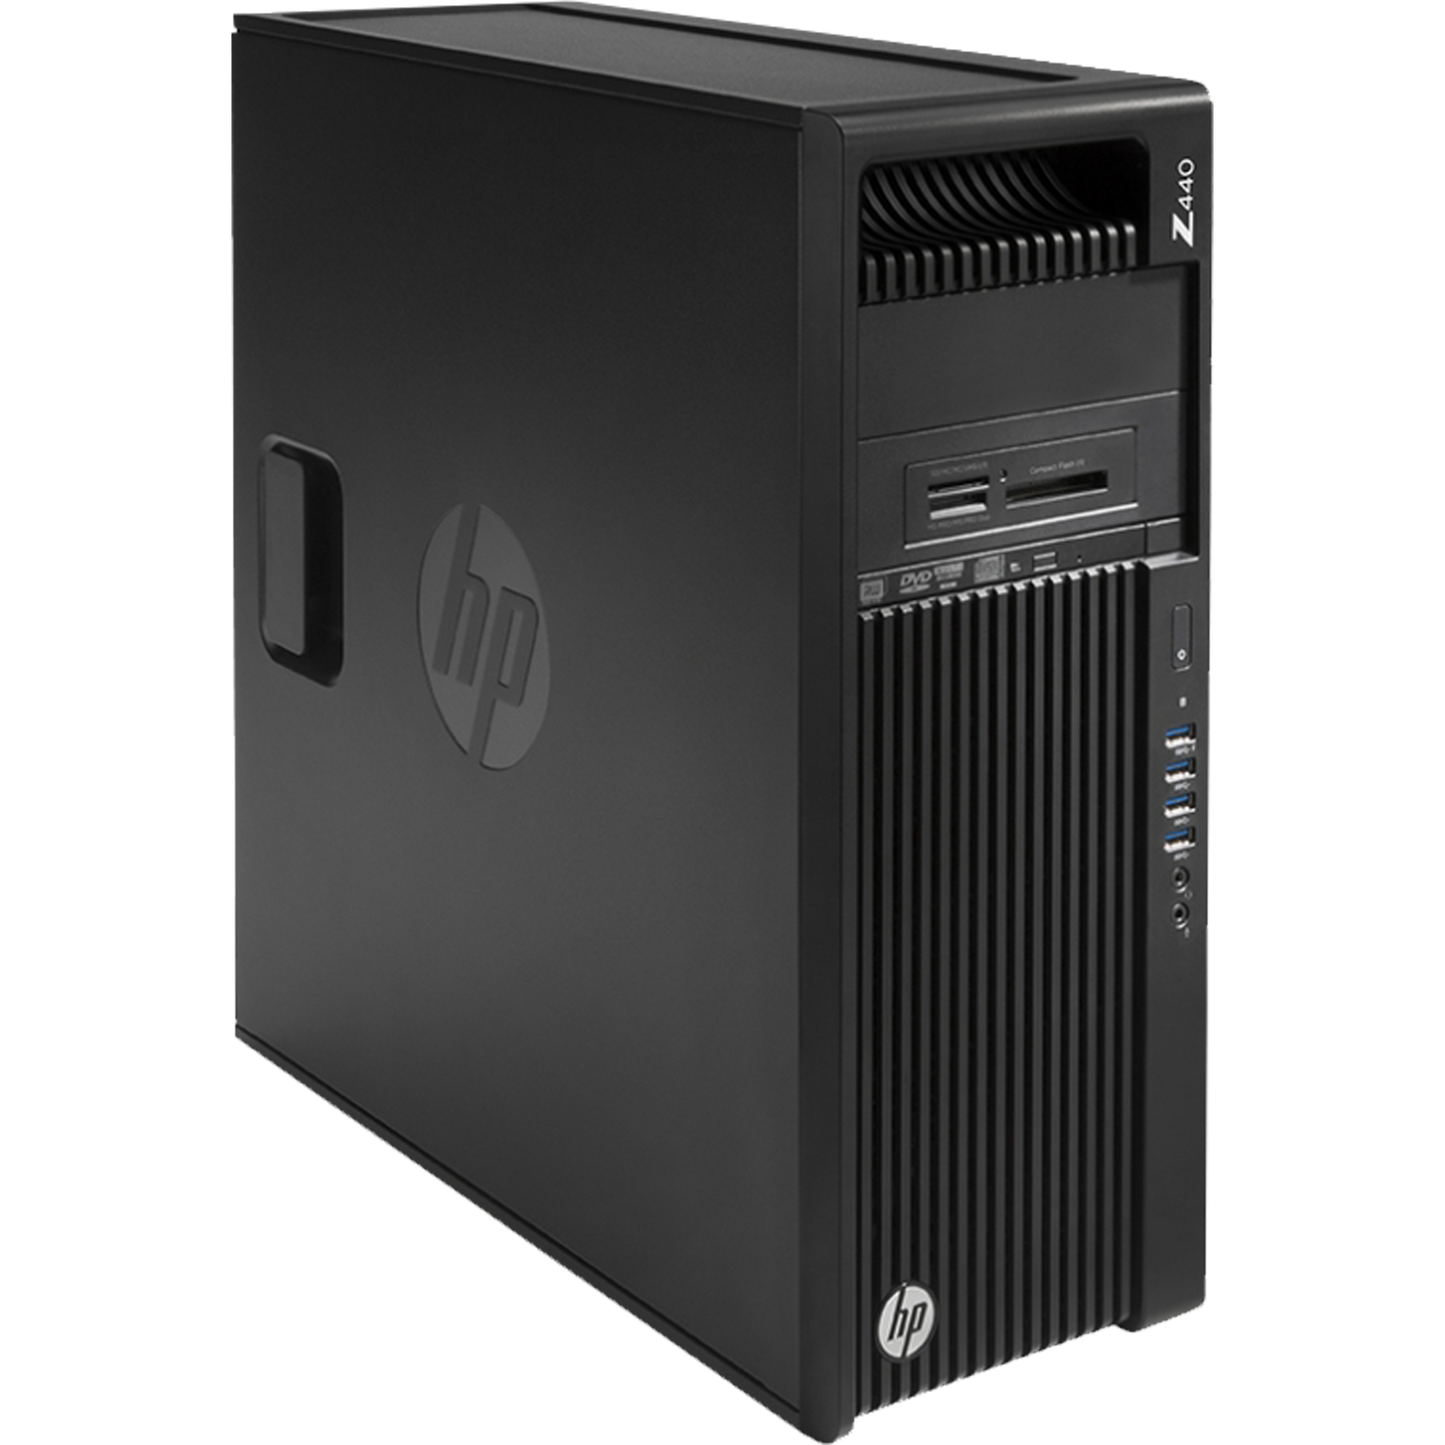 HP Z440 Workstation Intel Xeon Tower PC with 64GB Ram + 4GB GPU Desktop Computers